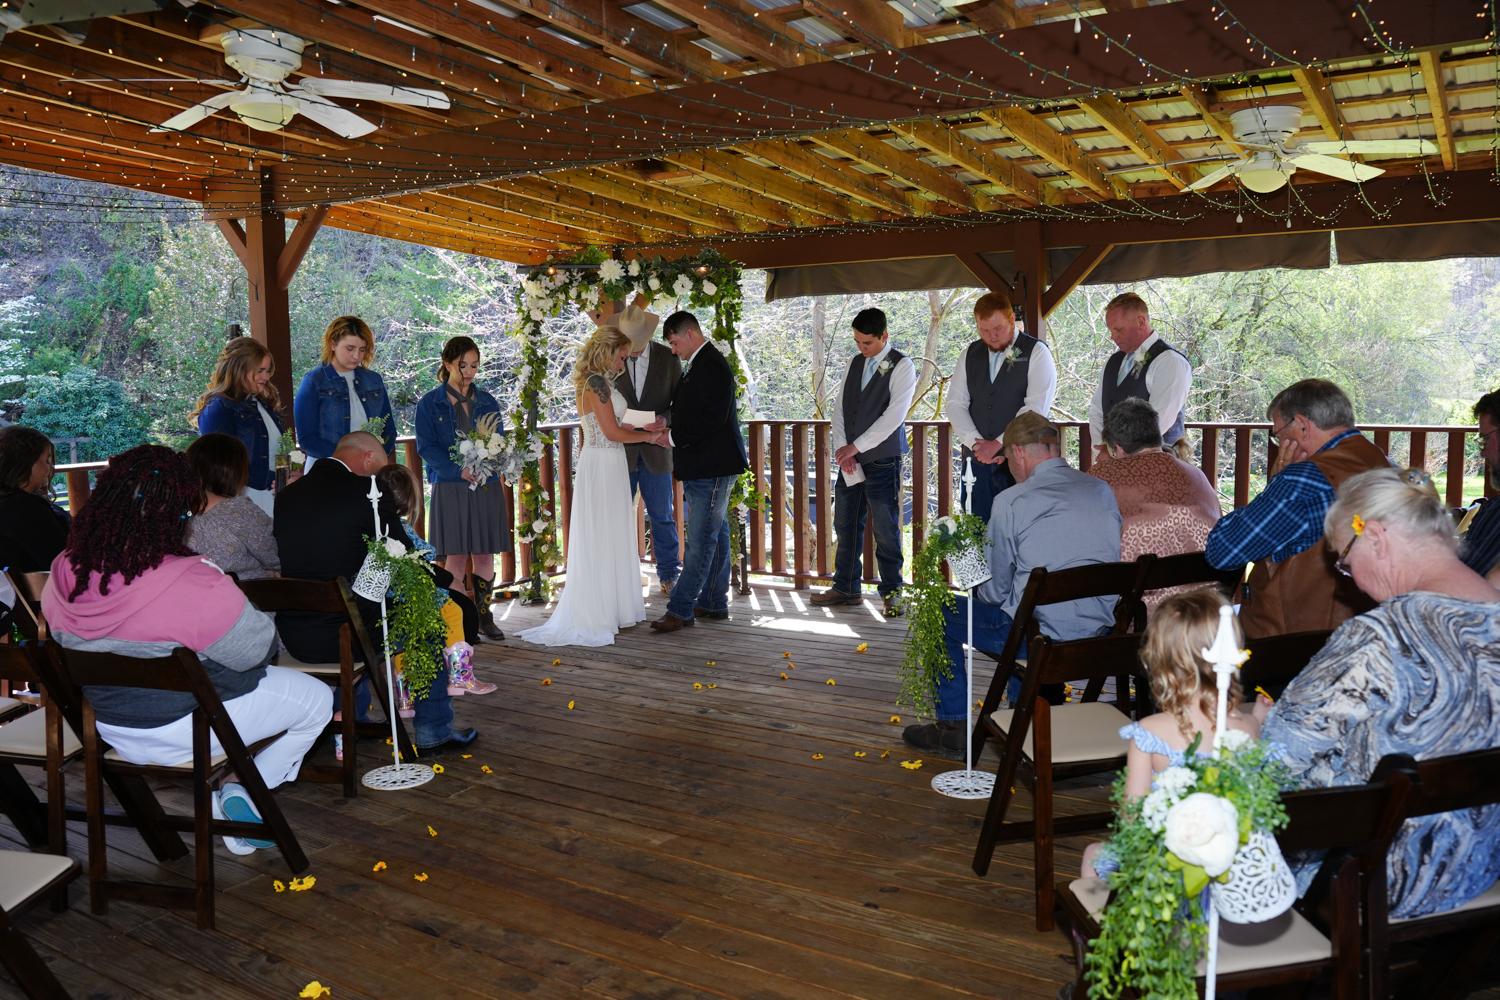 Wedding ceremony under a covered pavilion